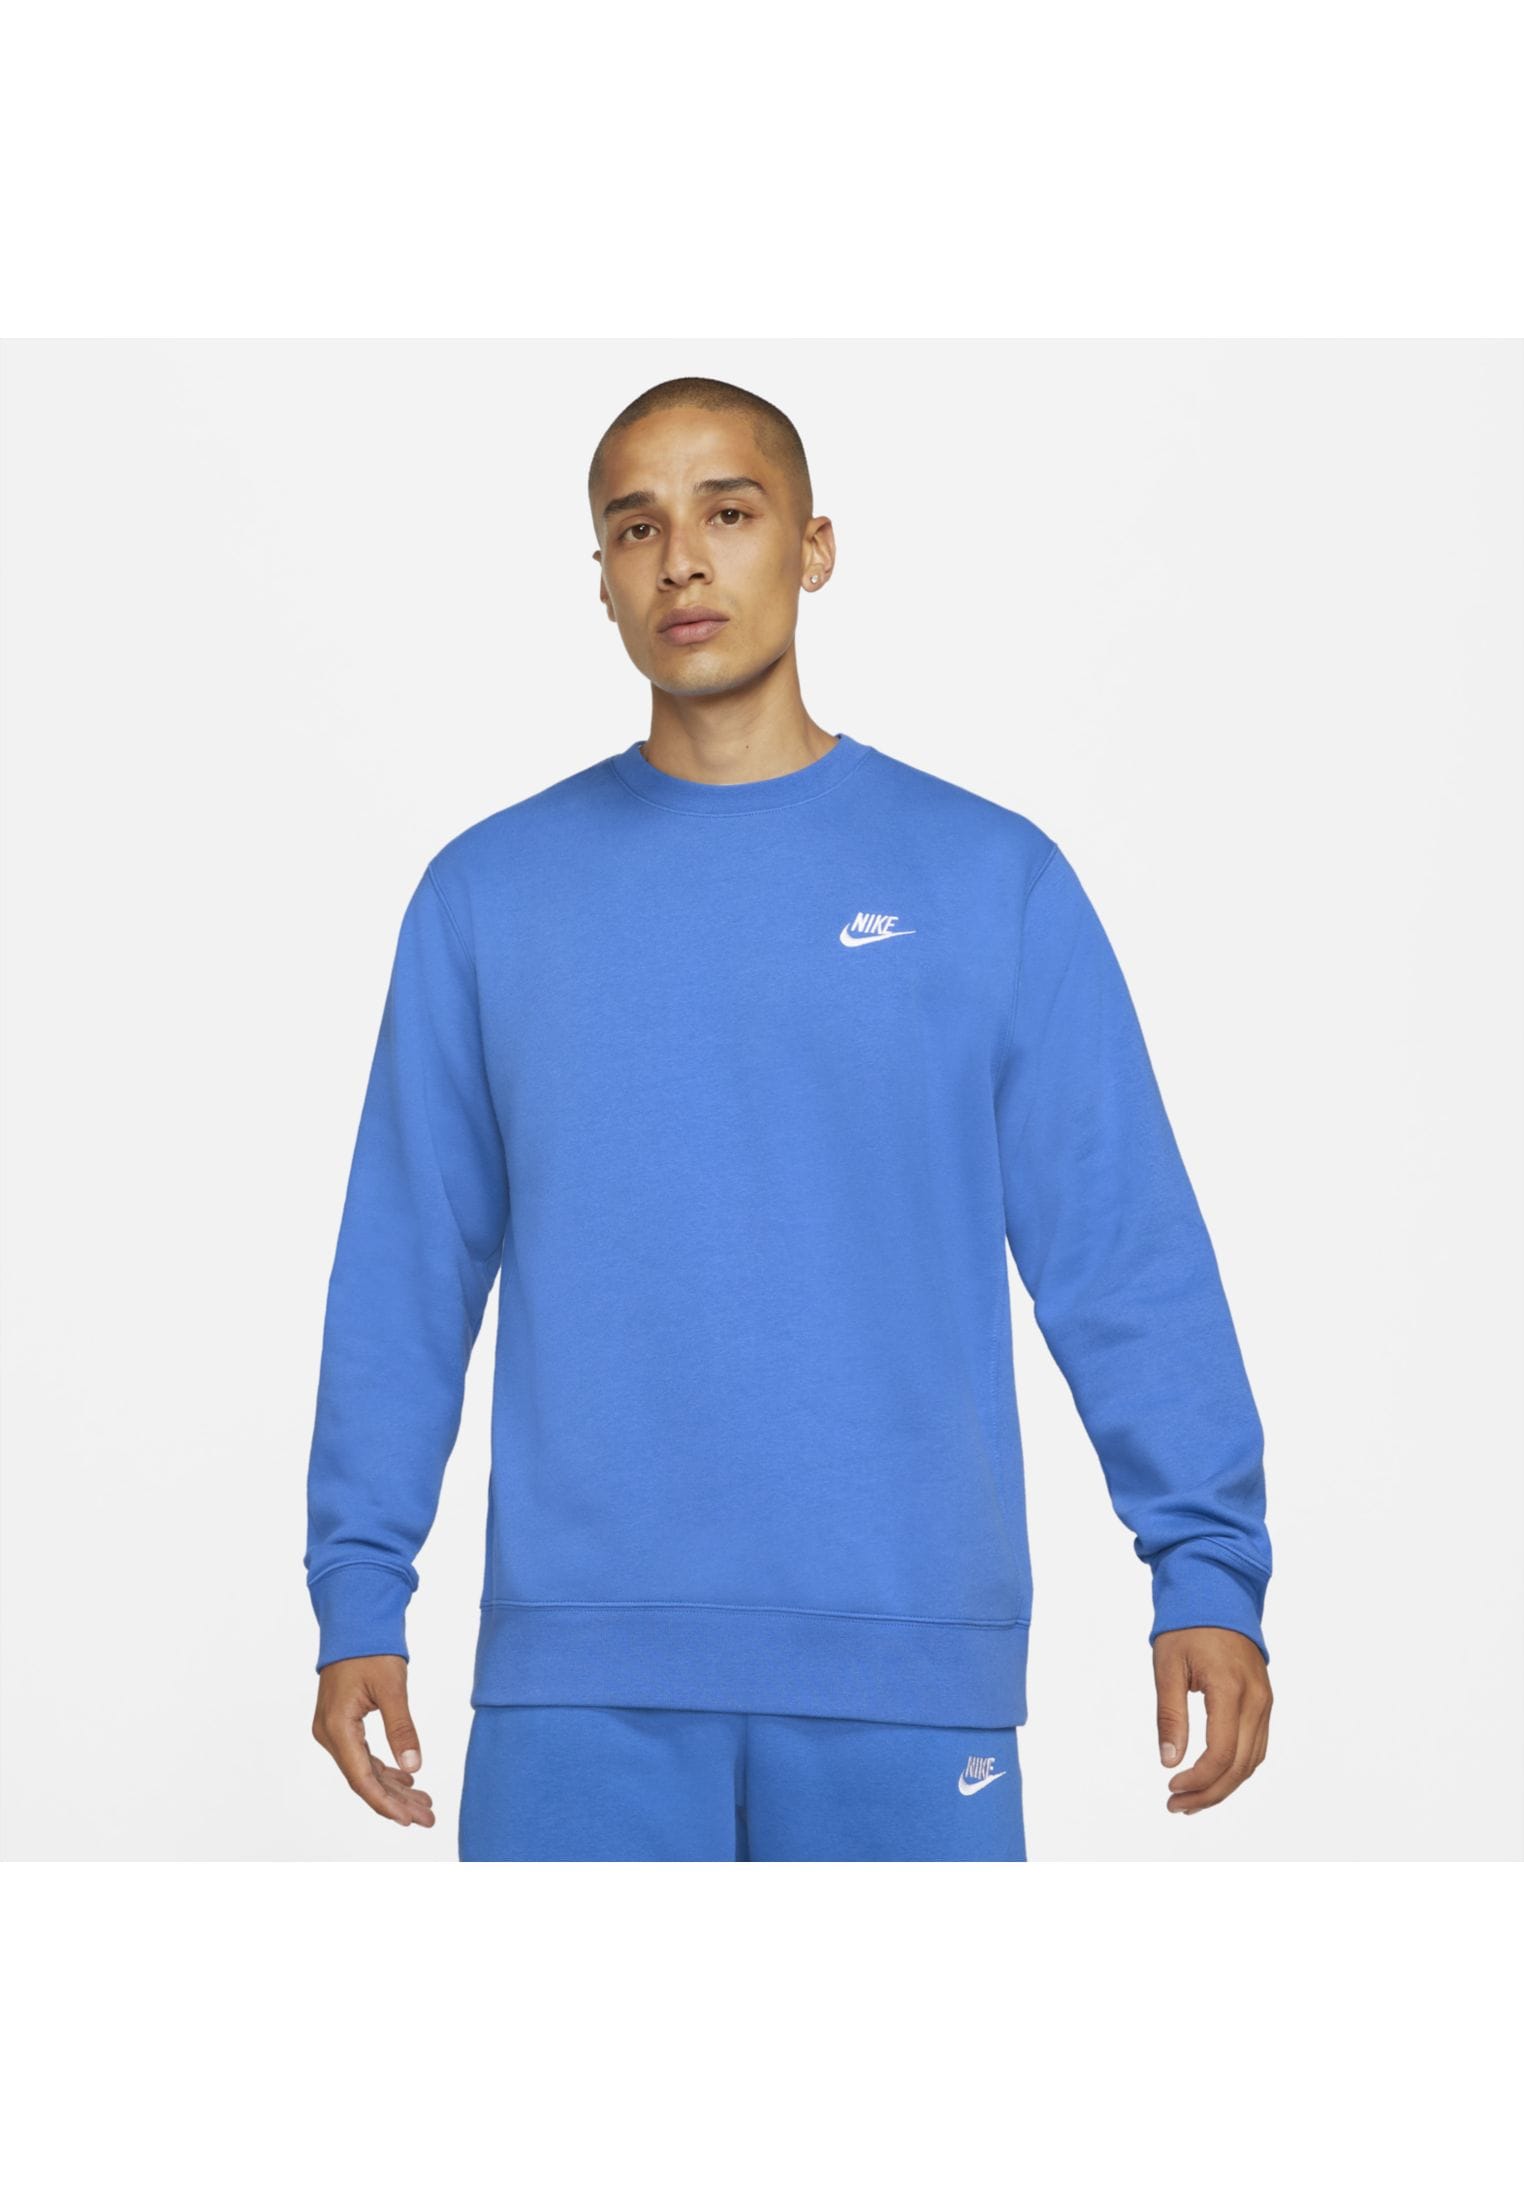 Nike Sportswear Club Fleece Crew - Light Army/White - Mens Clothing